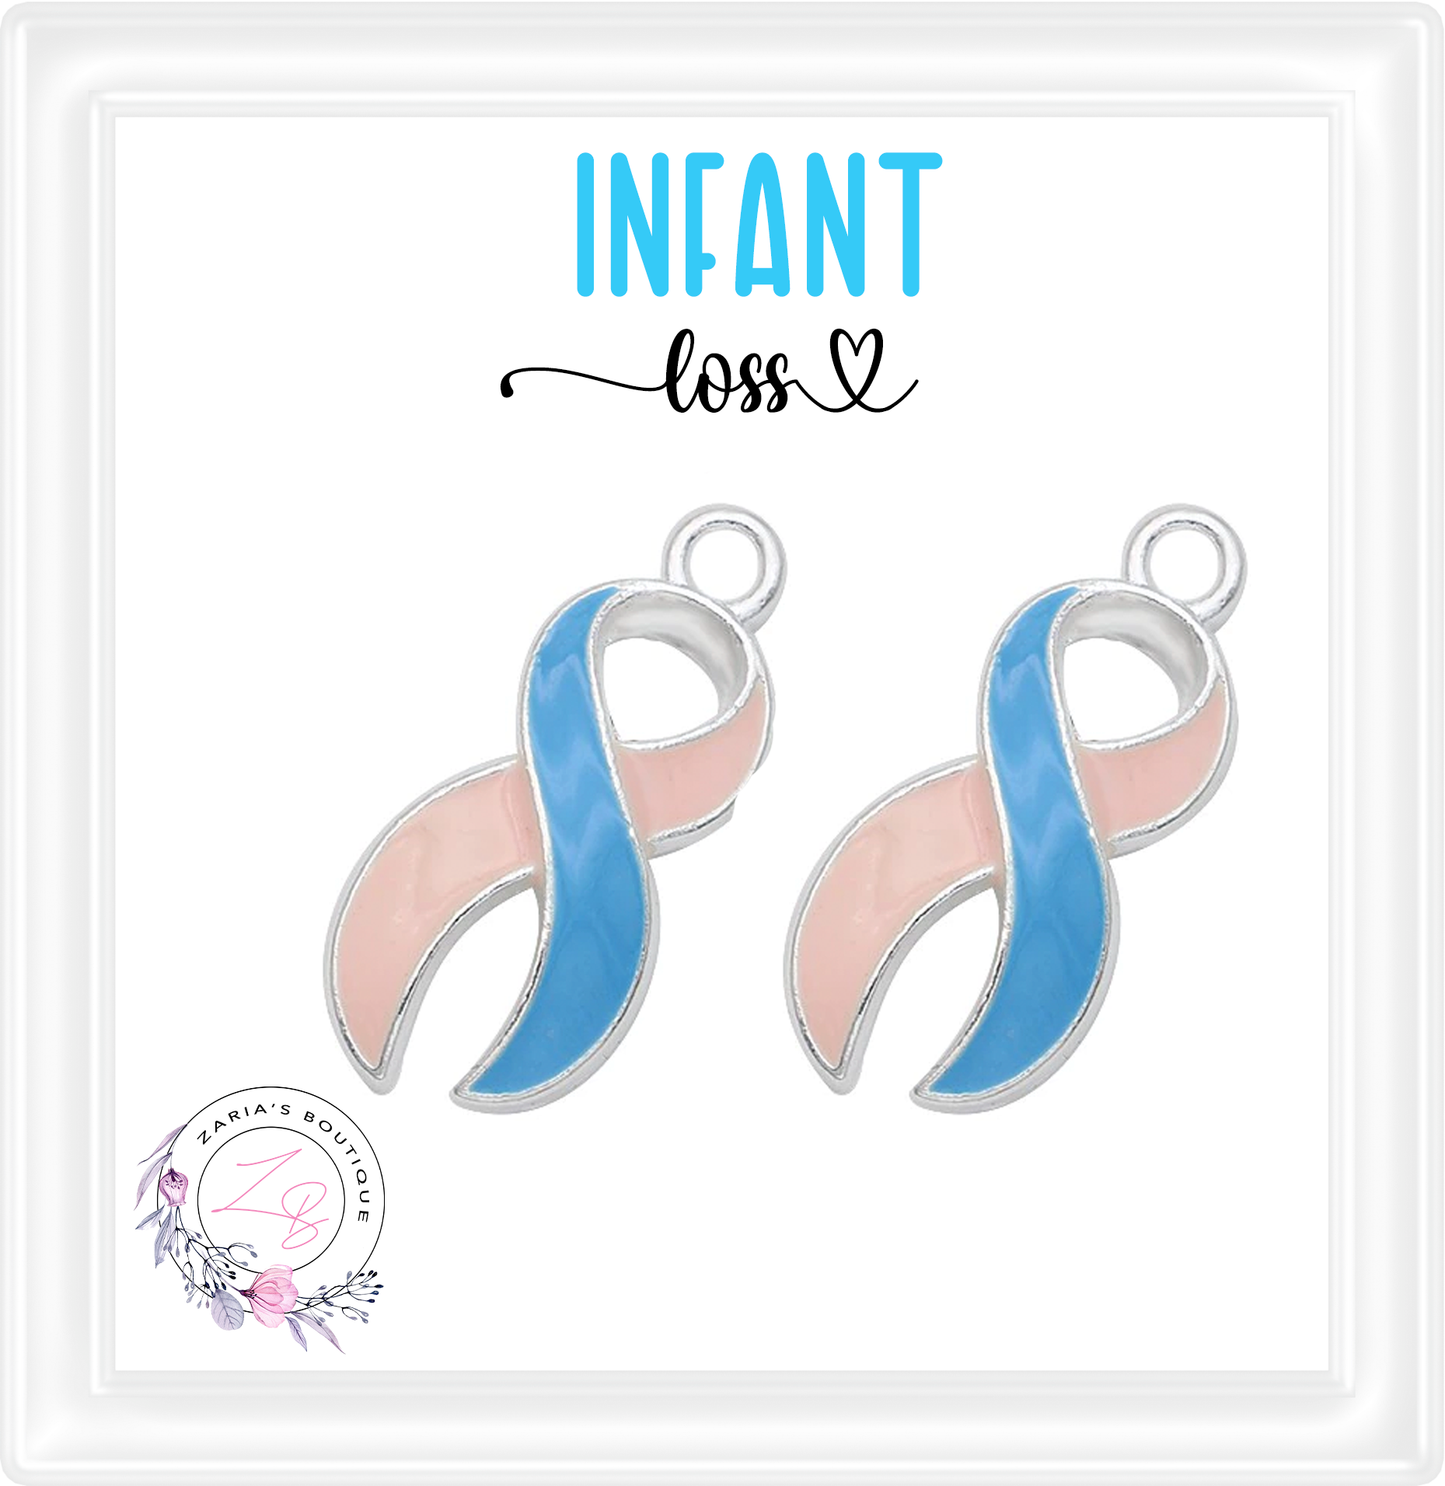 ⋅ Infant Loss ⋅ Pink & Blue Awareness Ribbon Charms ⋅